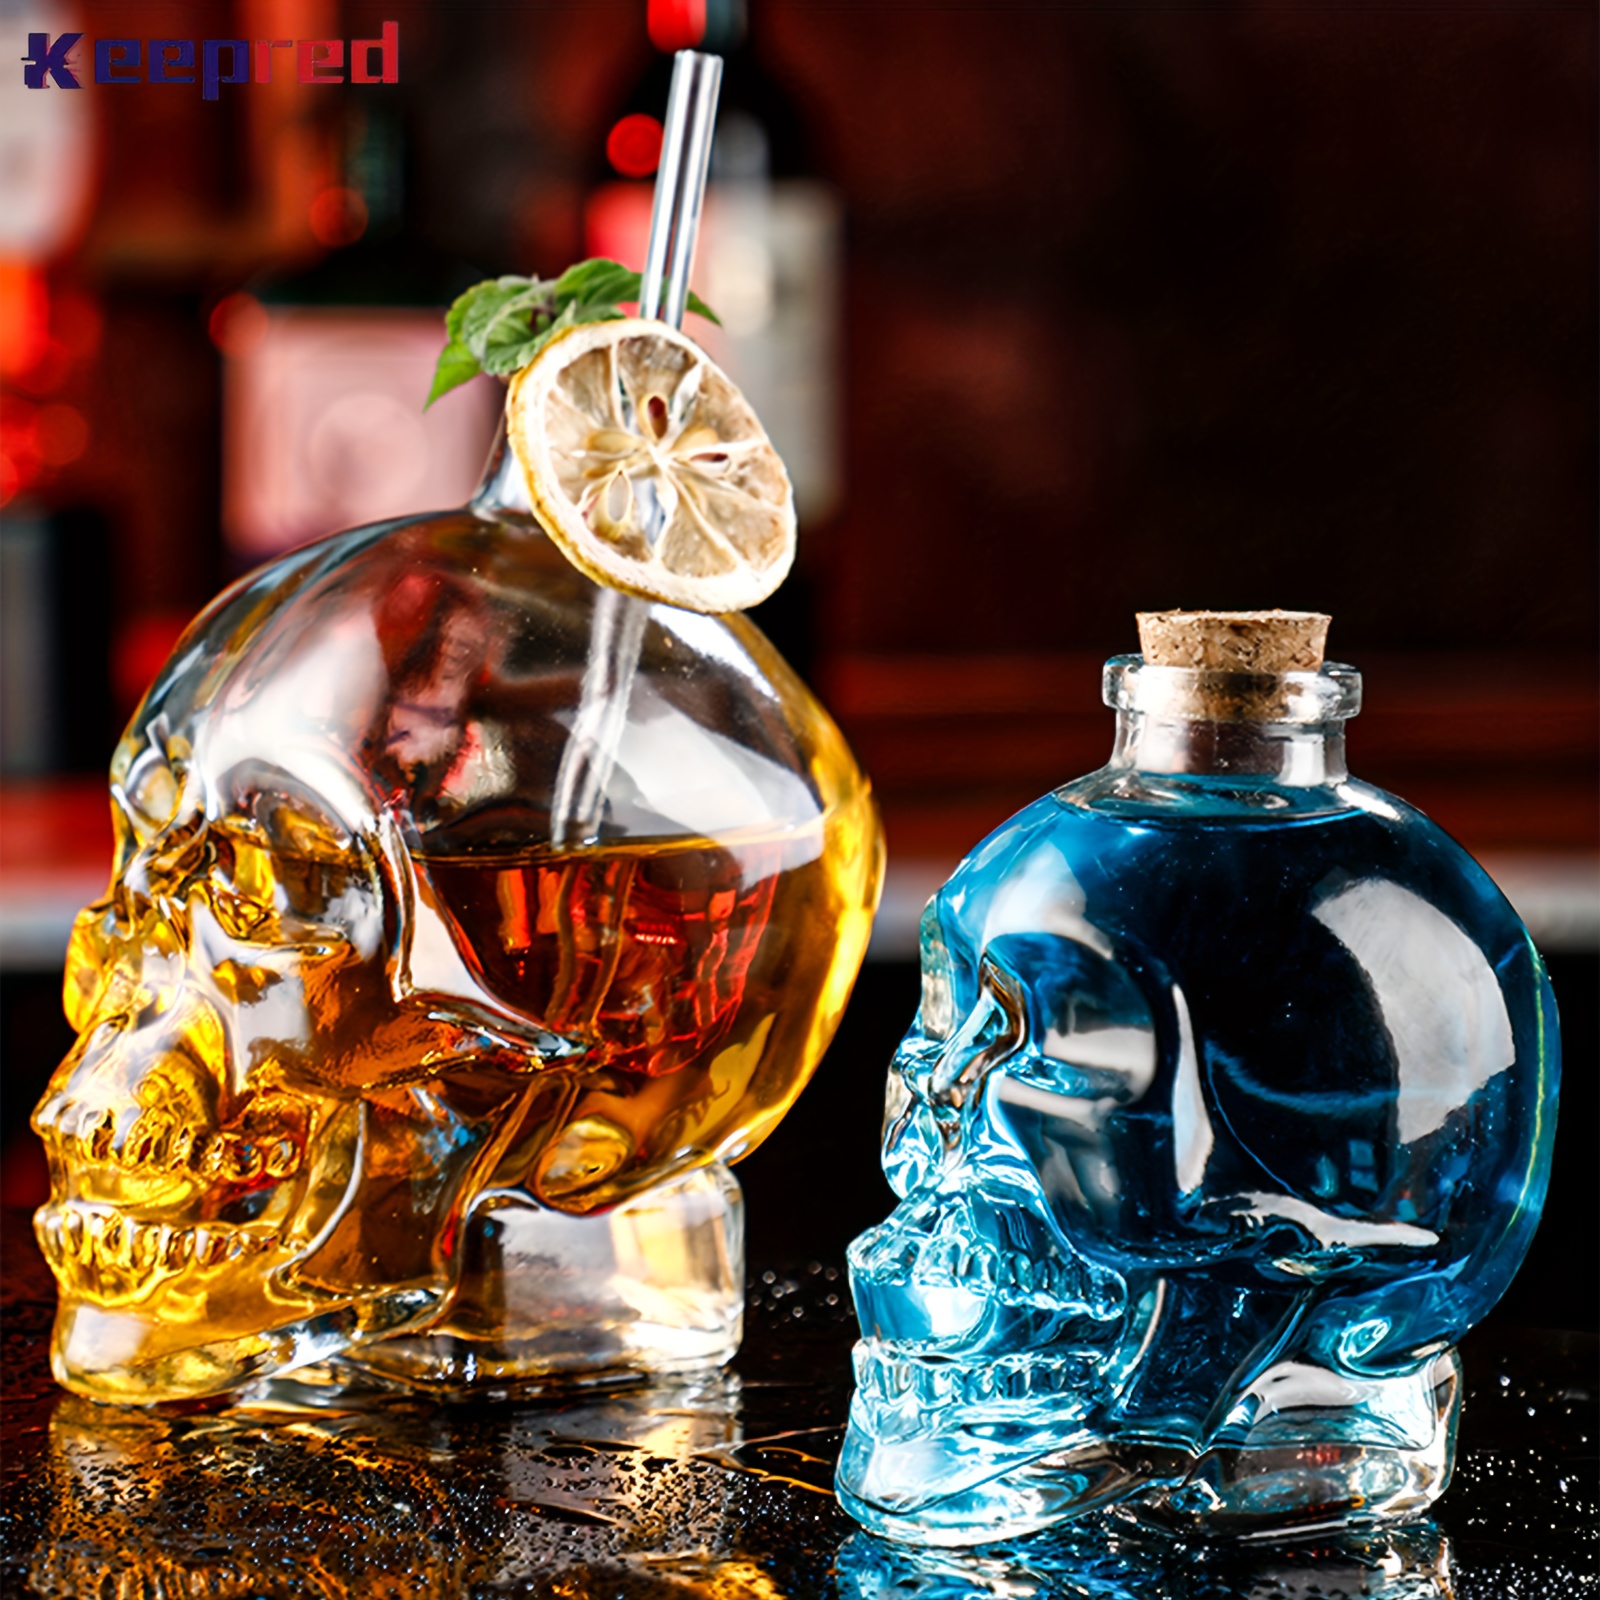 Whiskey Decanter Creative Glass DarthVader Bar Set Wine Glasses